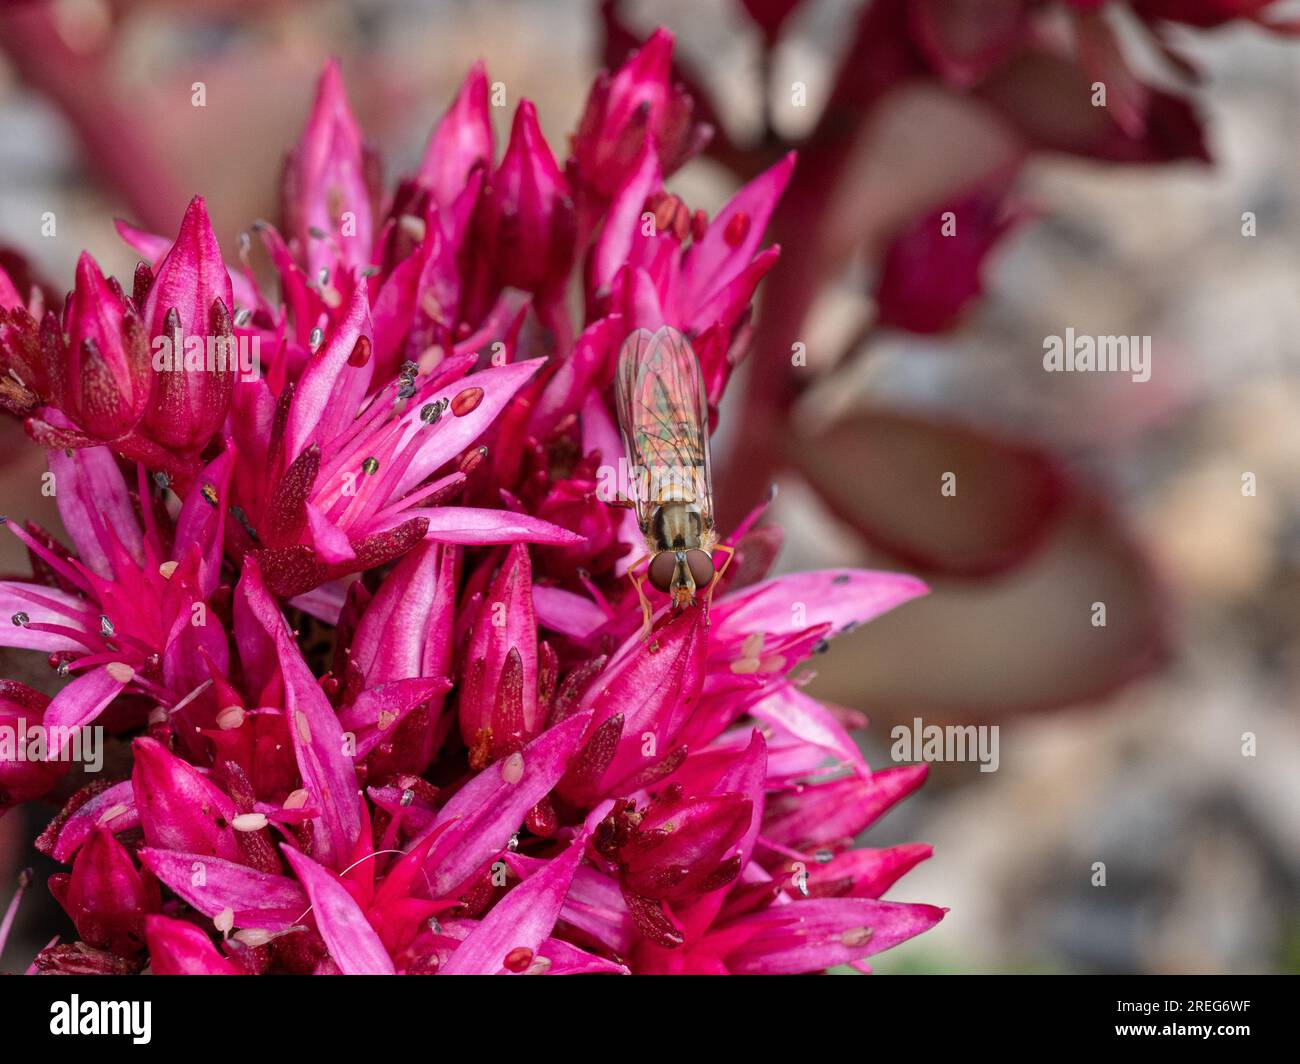 A hoverfly feeding on the starry pink flowers of Sedum spurium 'Purpureum' Stock Photo